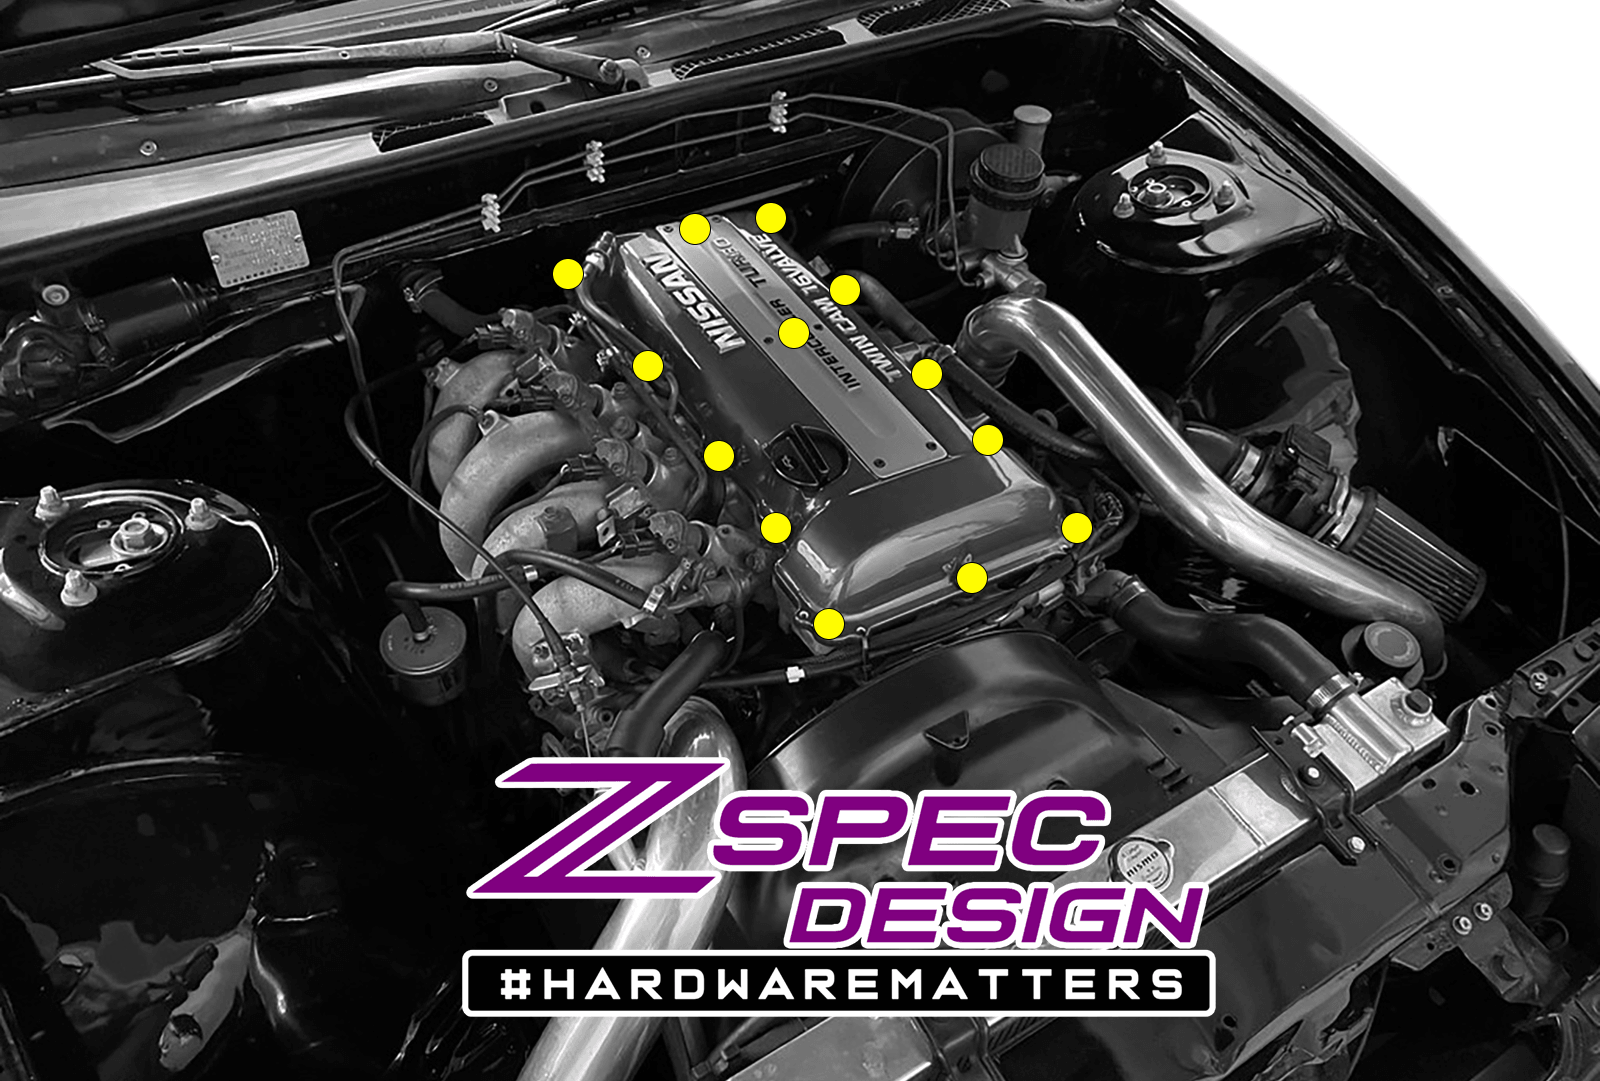 ZSPEC SR20DET (Non-VTC) Valve Cover Hardware Kit, Grade-5 Titanium  Hardware Fasteners Beauty Bolts Car Show Engine Bay Upgrade Performance GR5 Customs Engine Motor Washers Flare Nuts